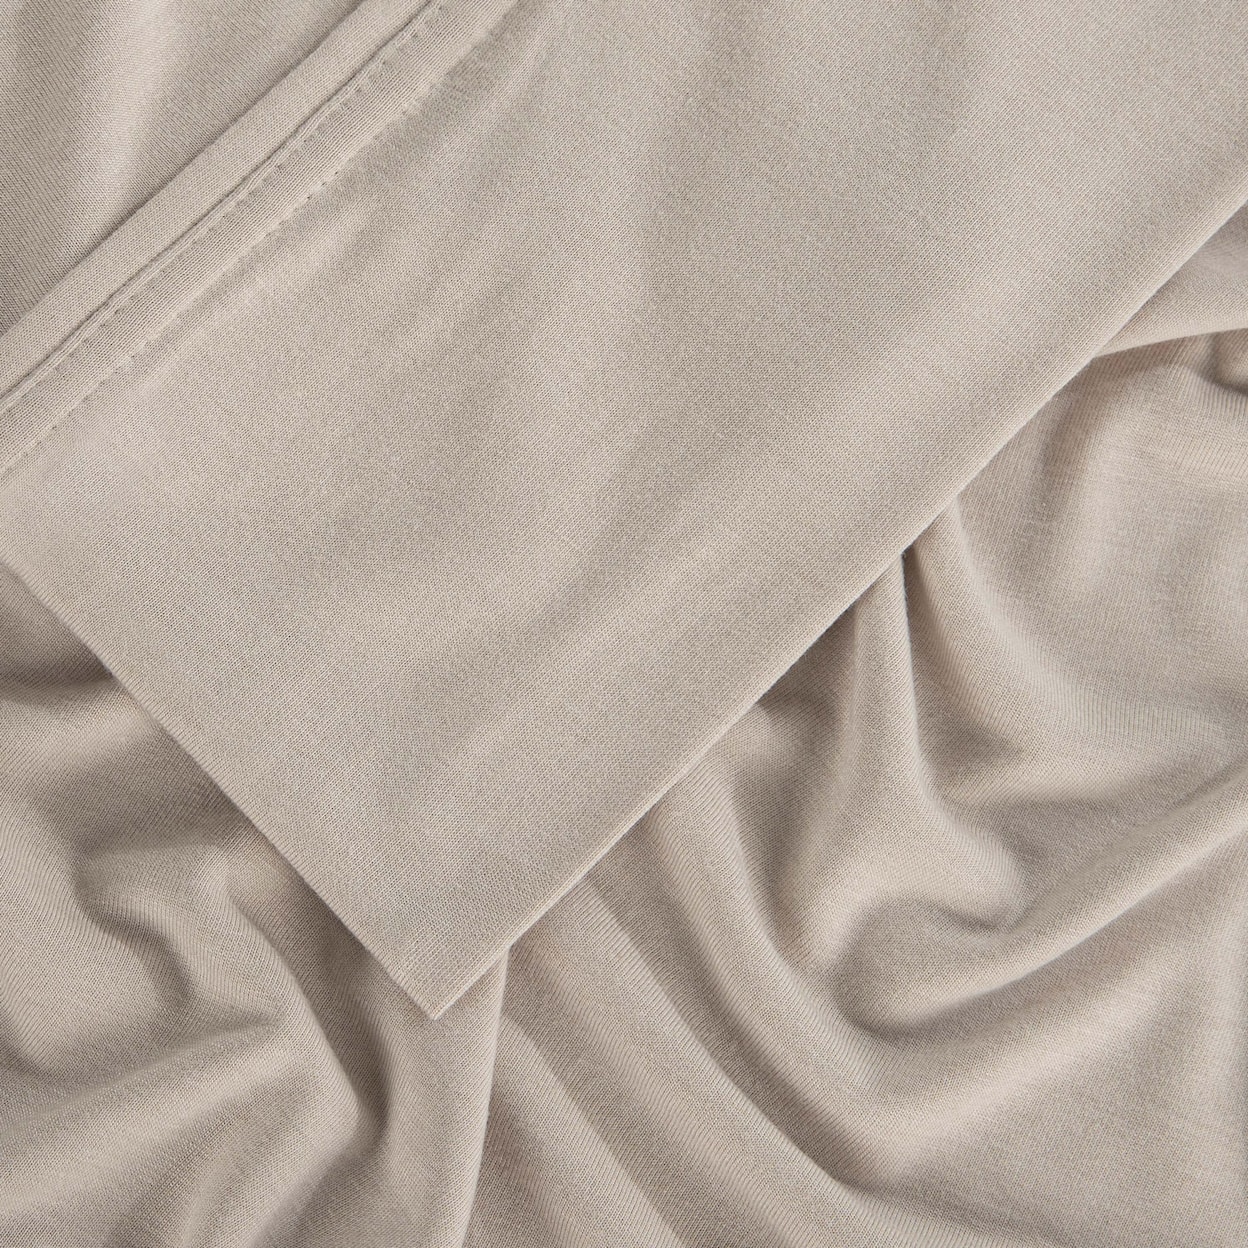 Bedgear Hyper-Wool Sheets Sheet Set, Beige, Queen